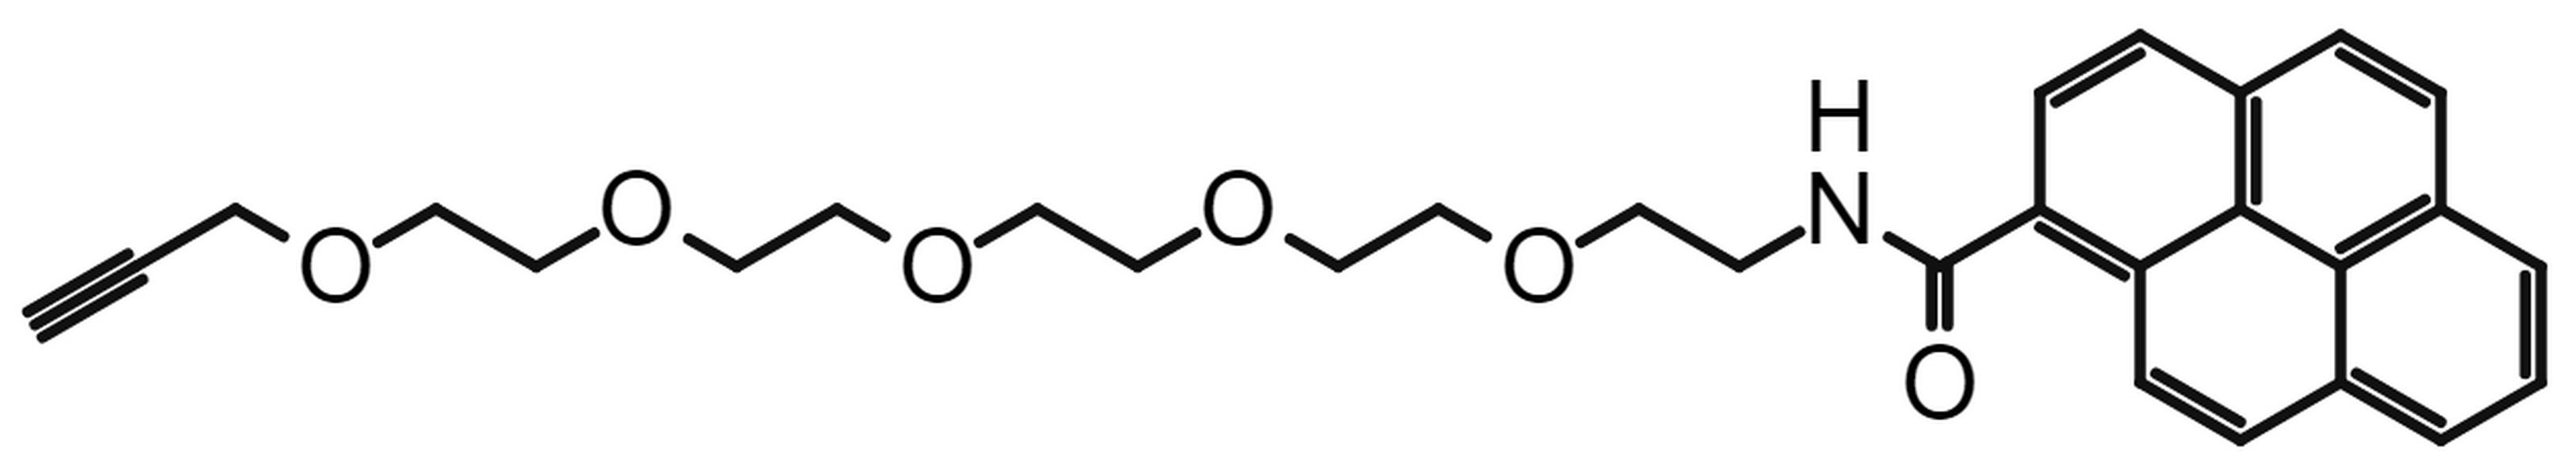 Pyrene-PEG5-propargyl